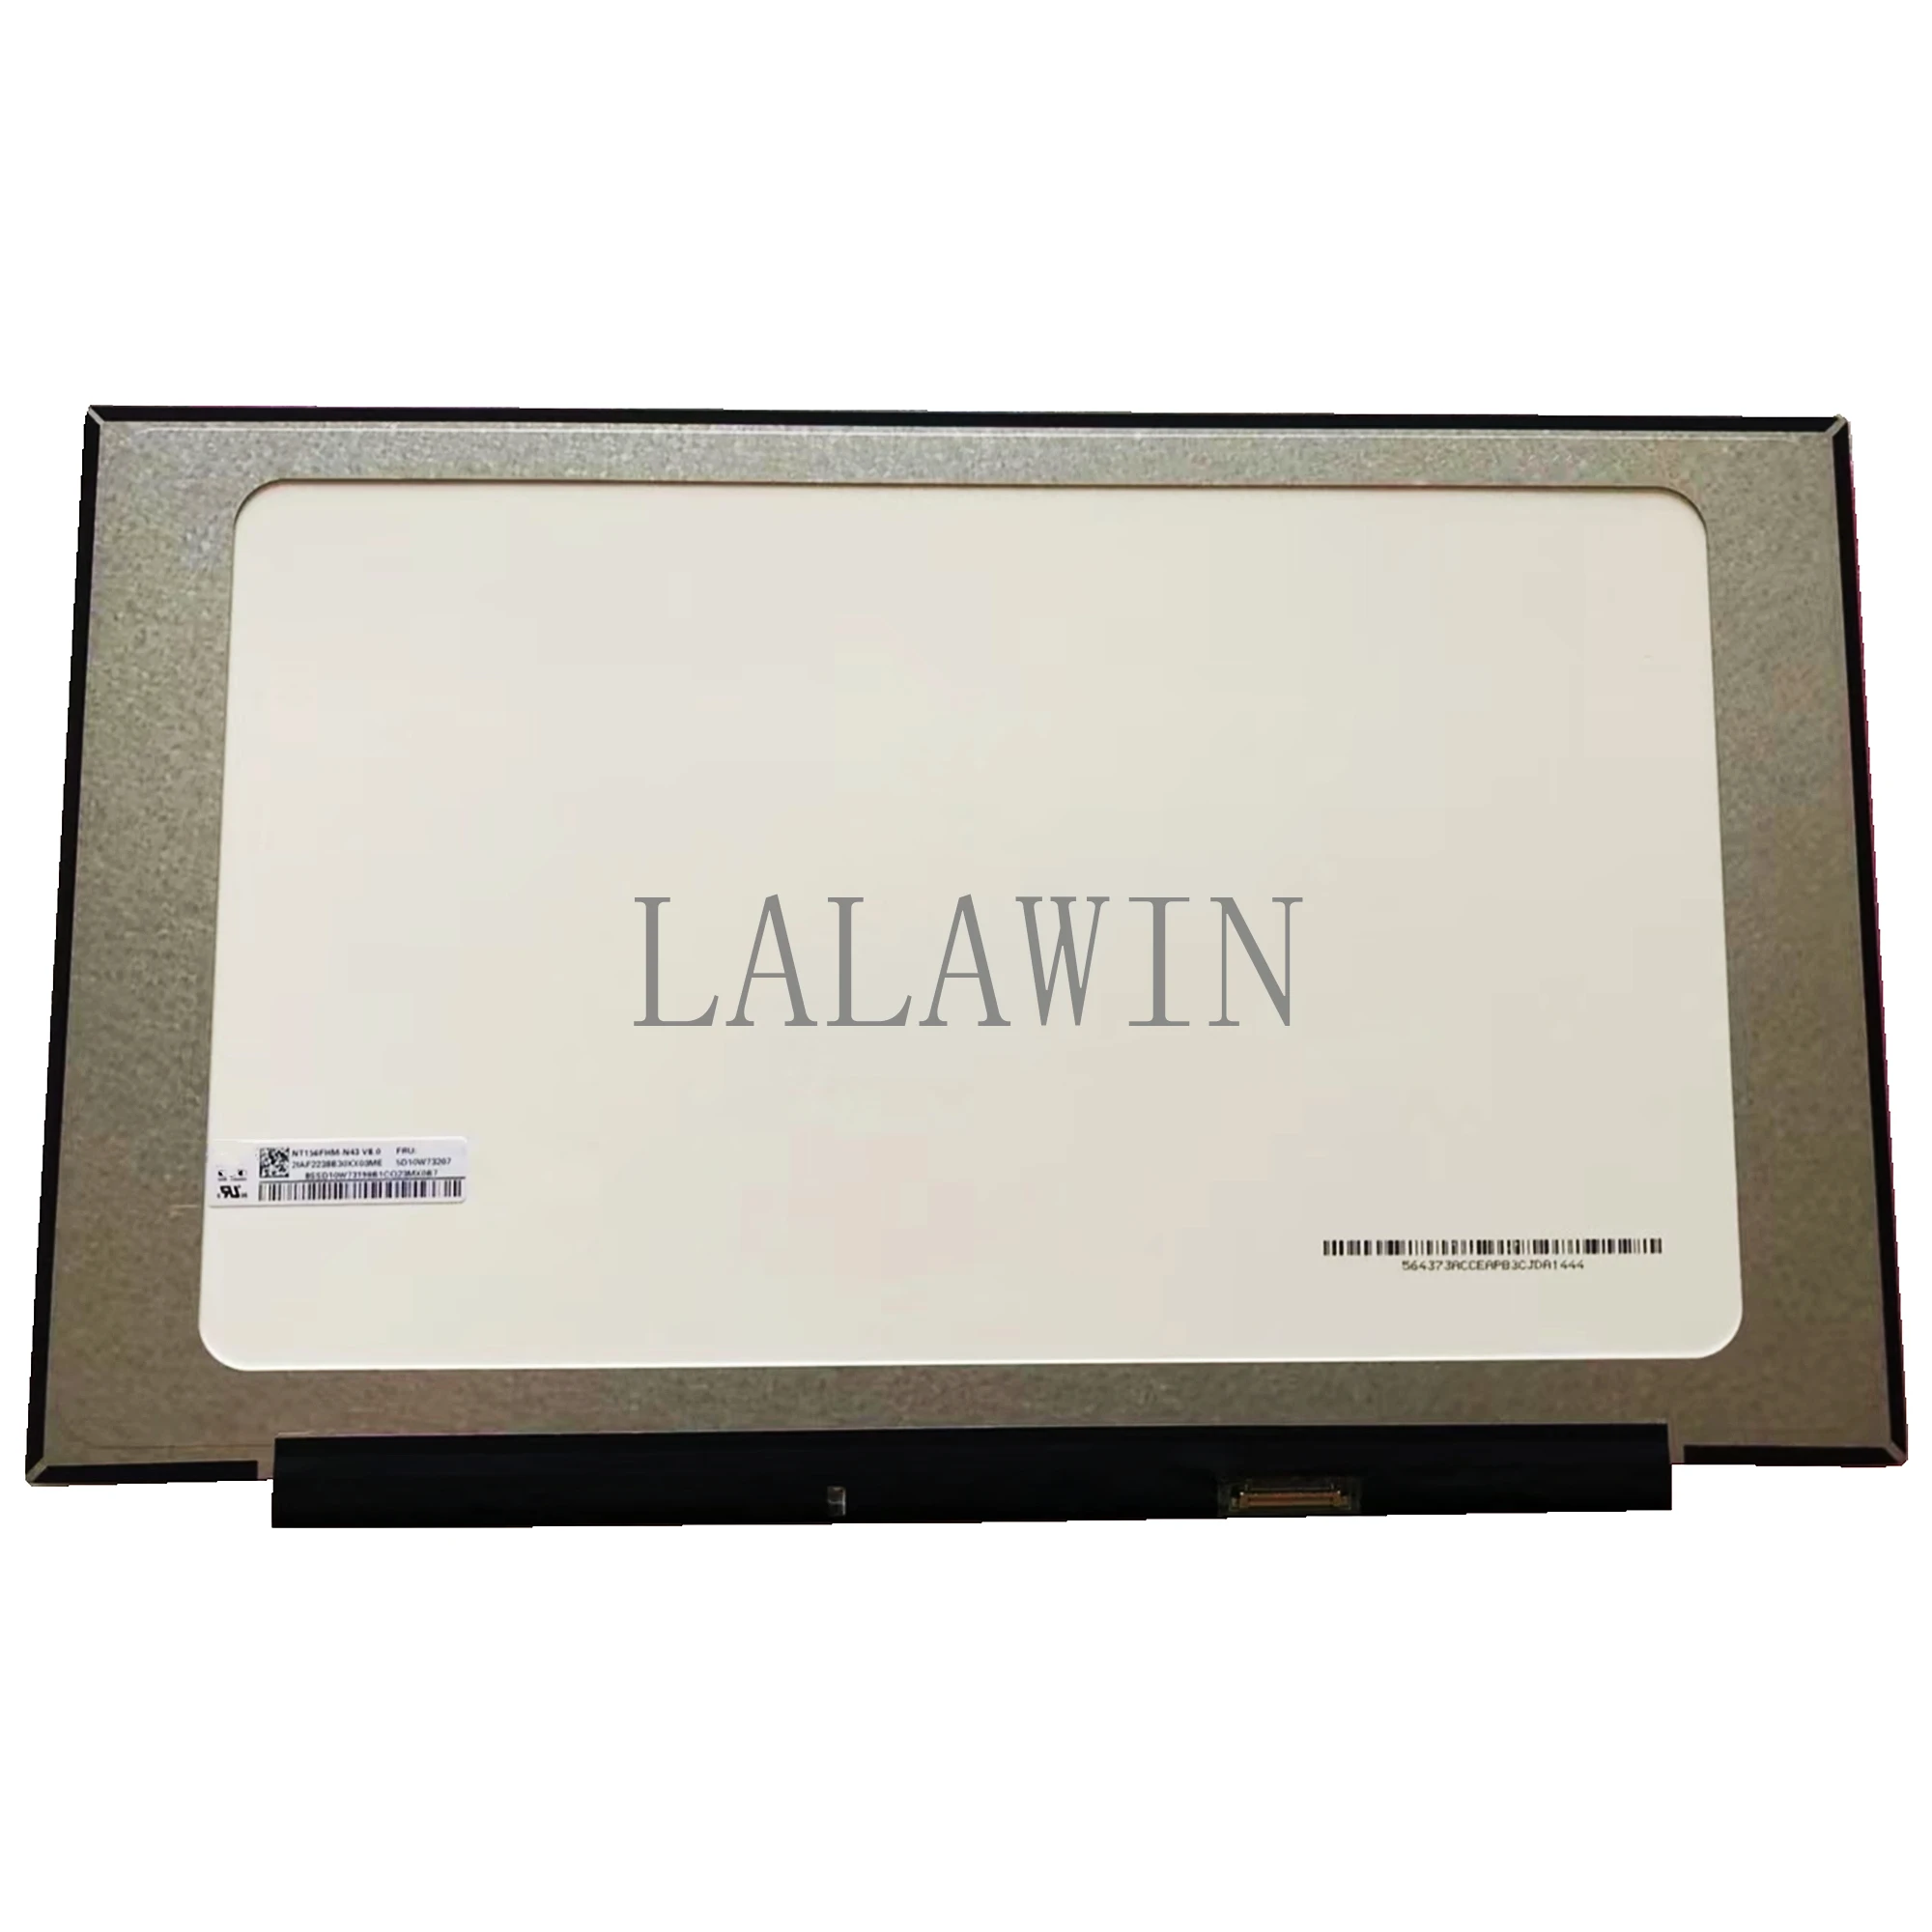 PANTALLA LCD LENOVO B156HTN06.2 15'6 PULGADAS